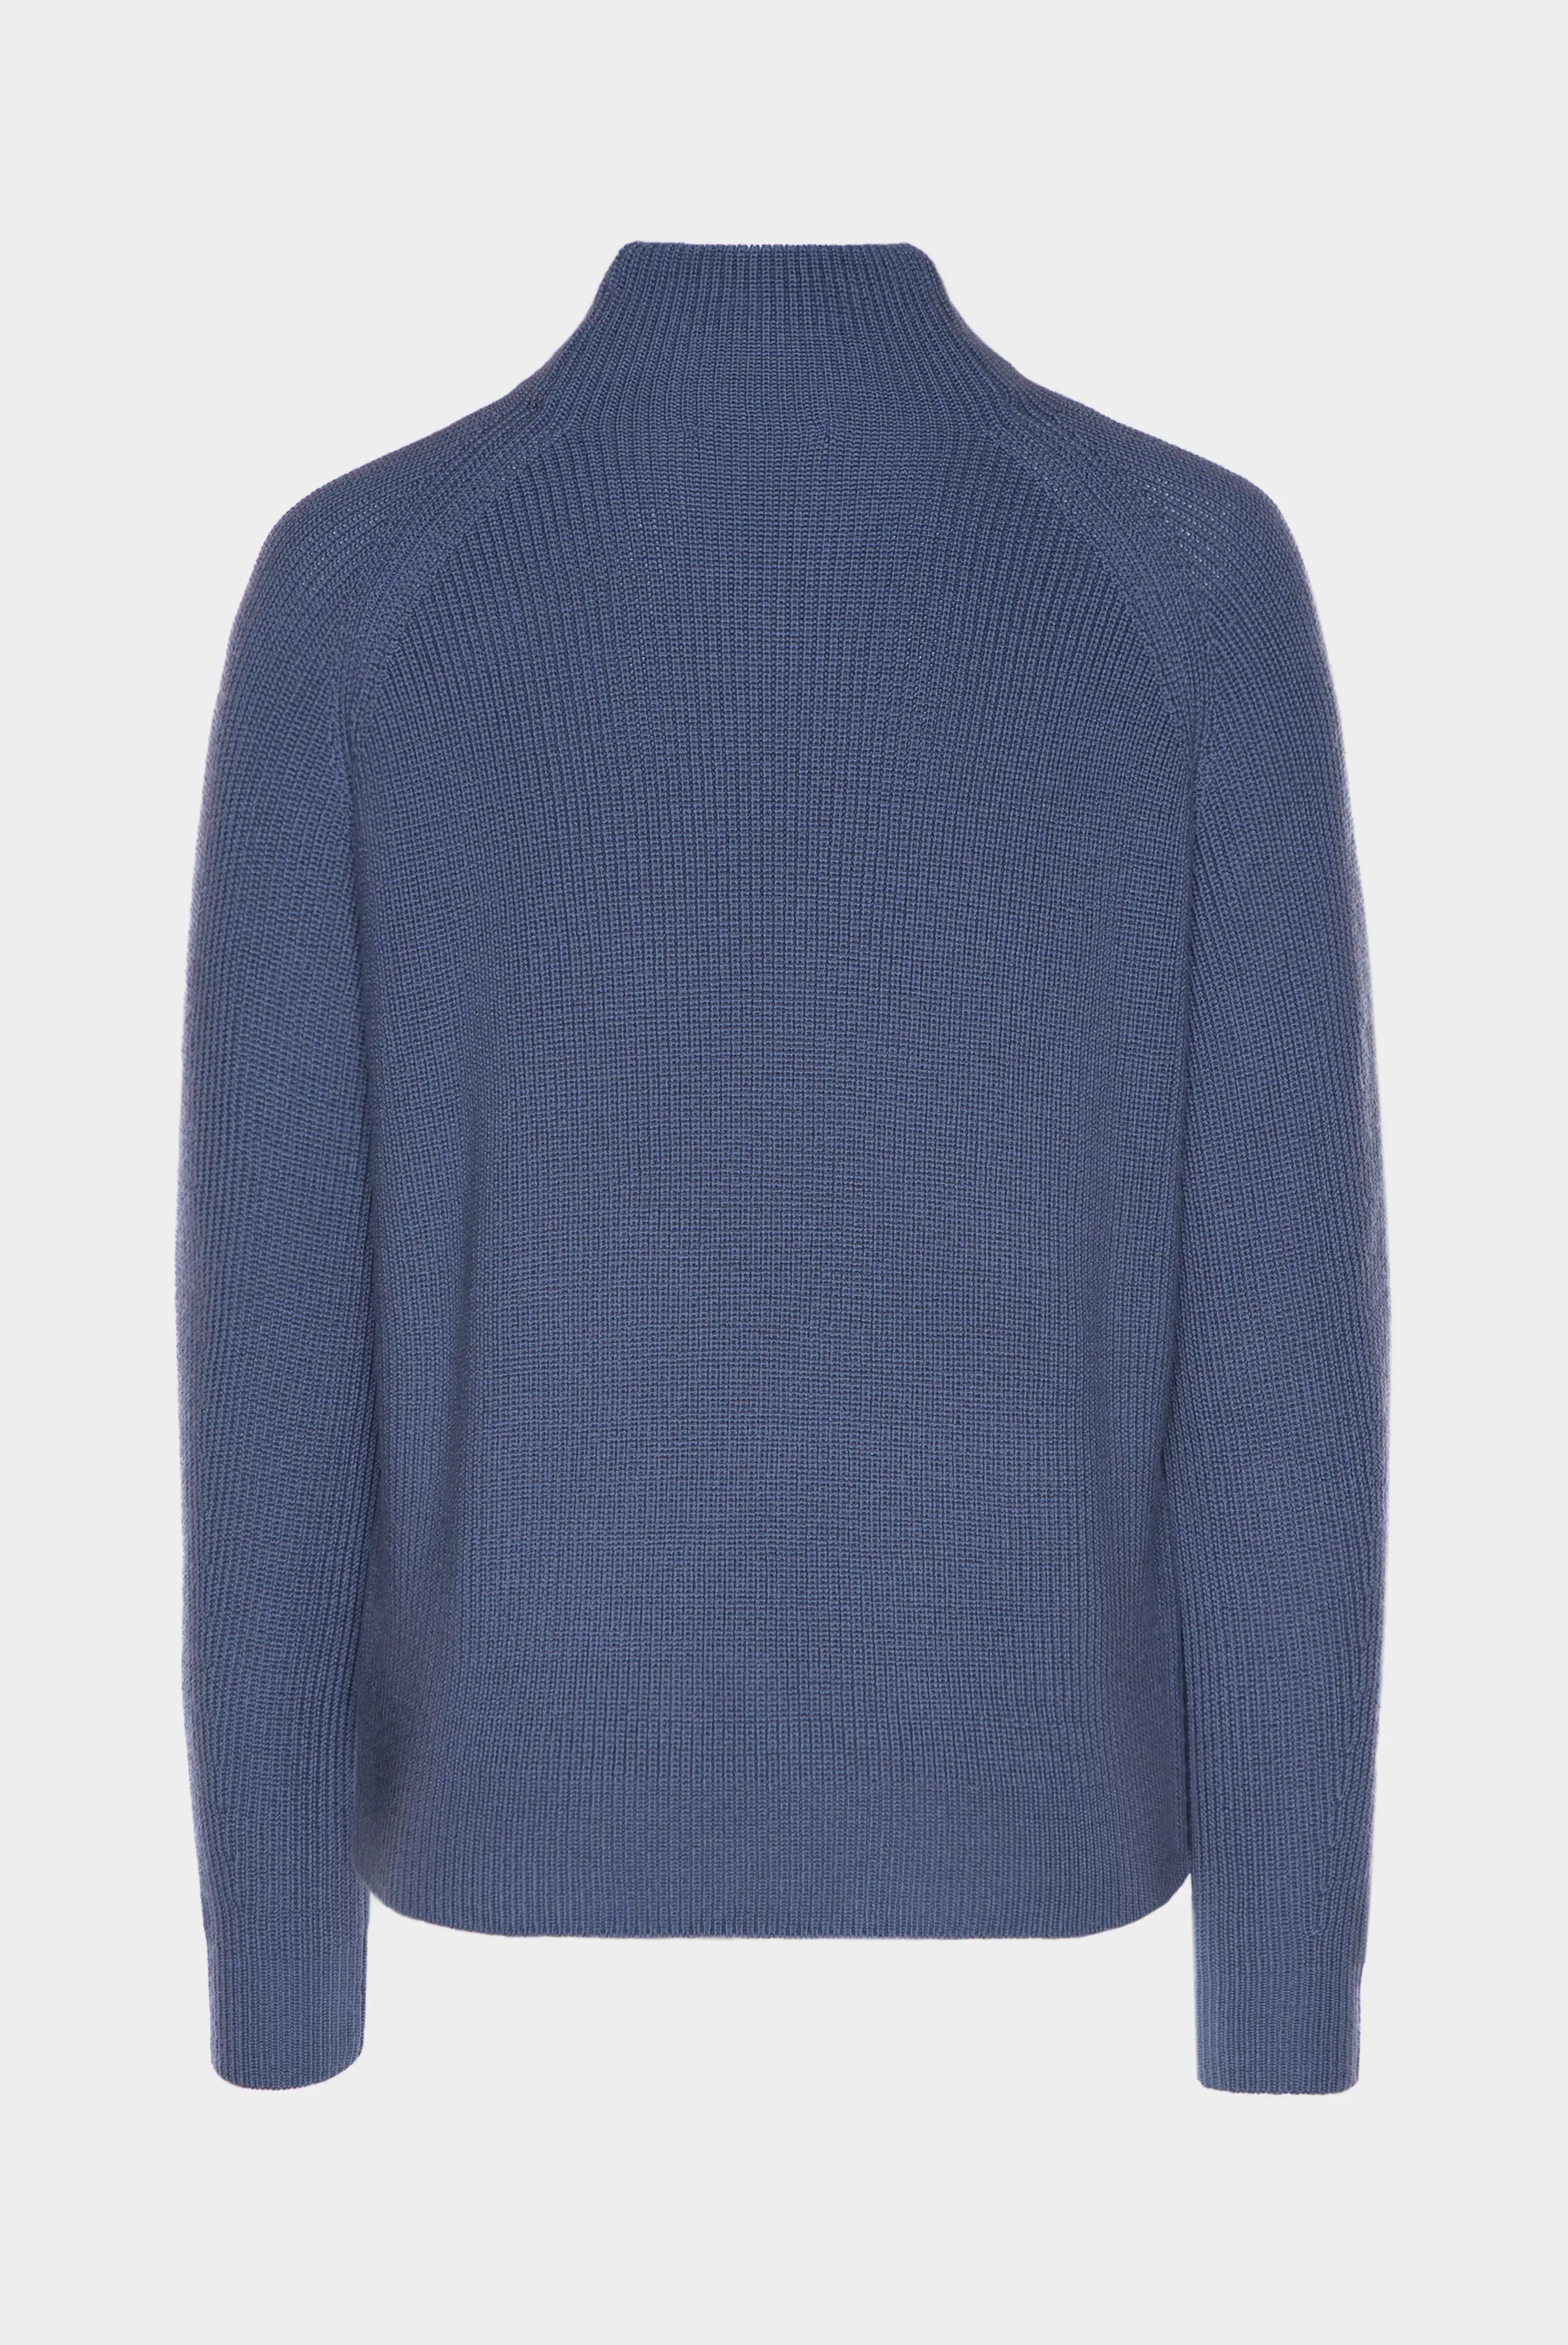 пуловер SULLY синий SULLY_S00220_770 ,photo 3